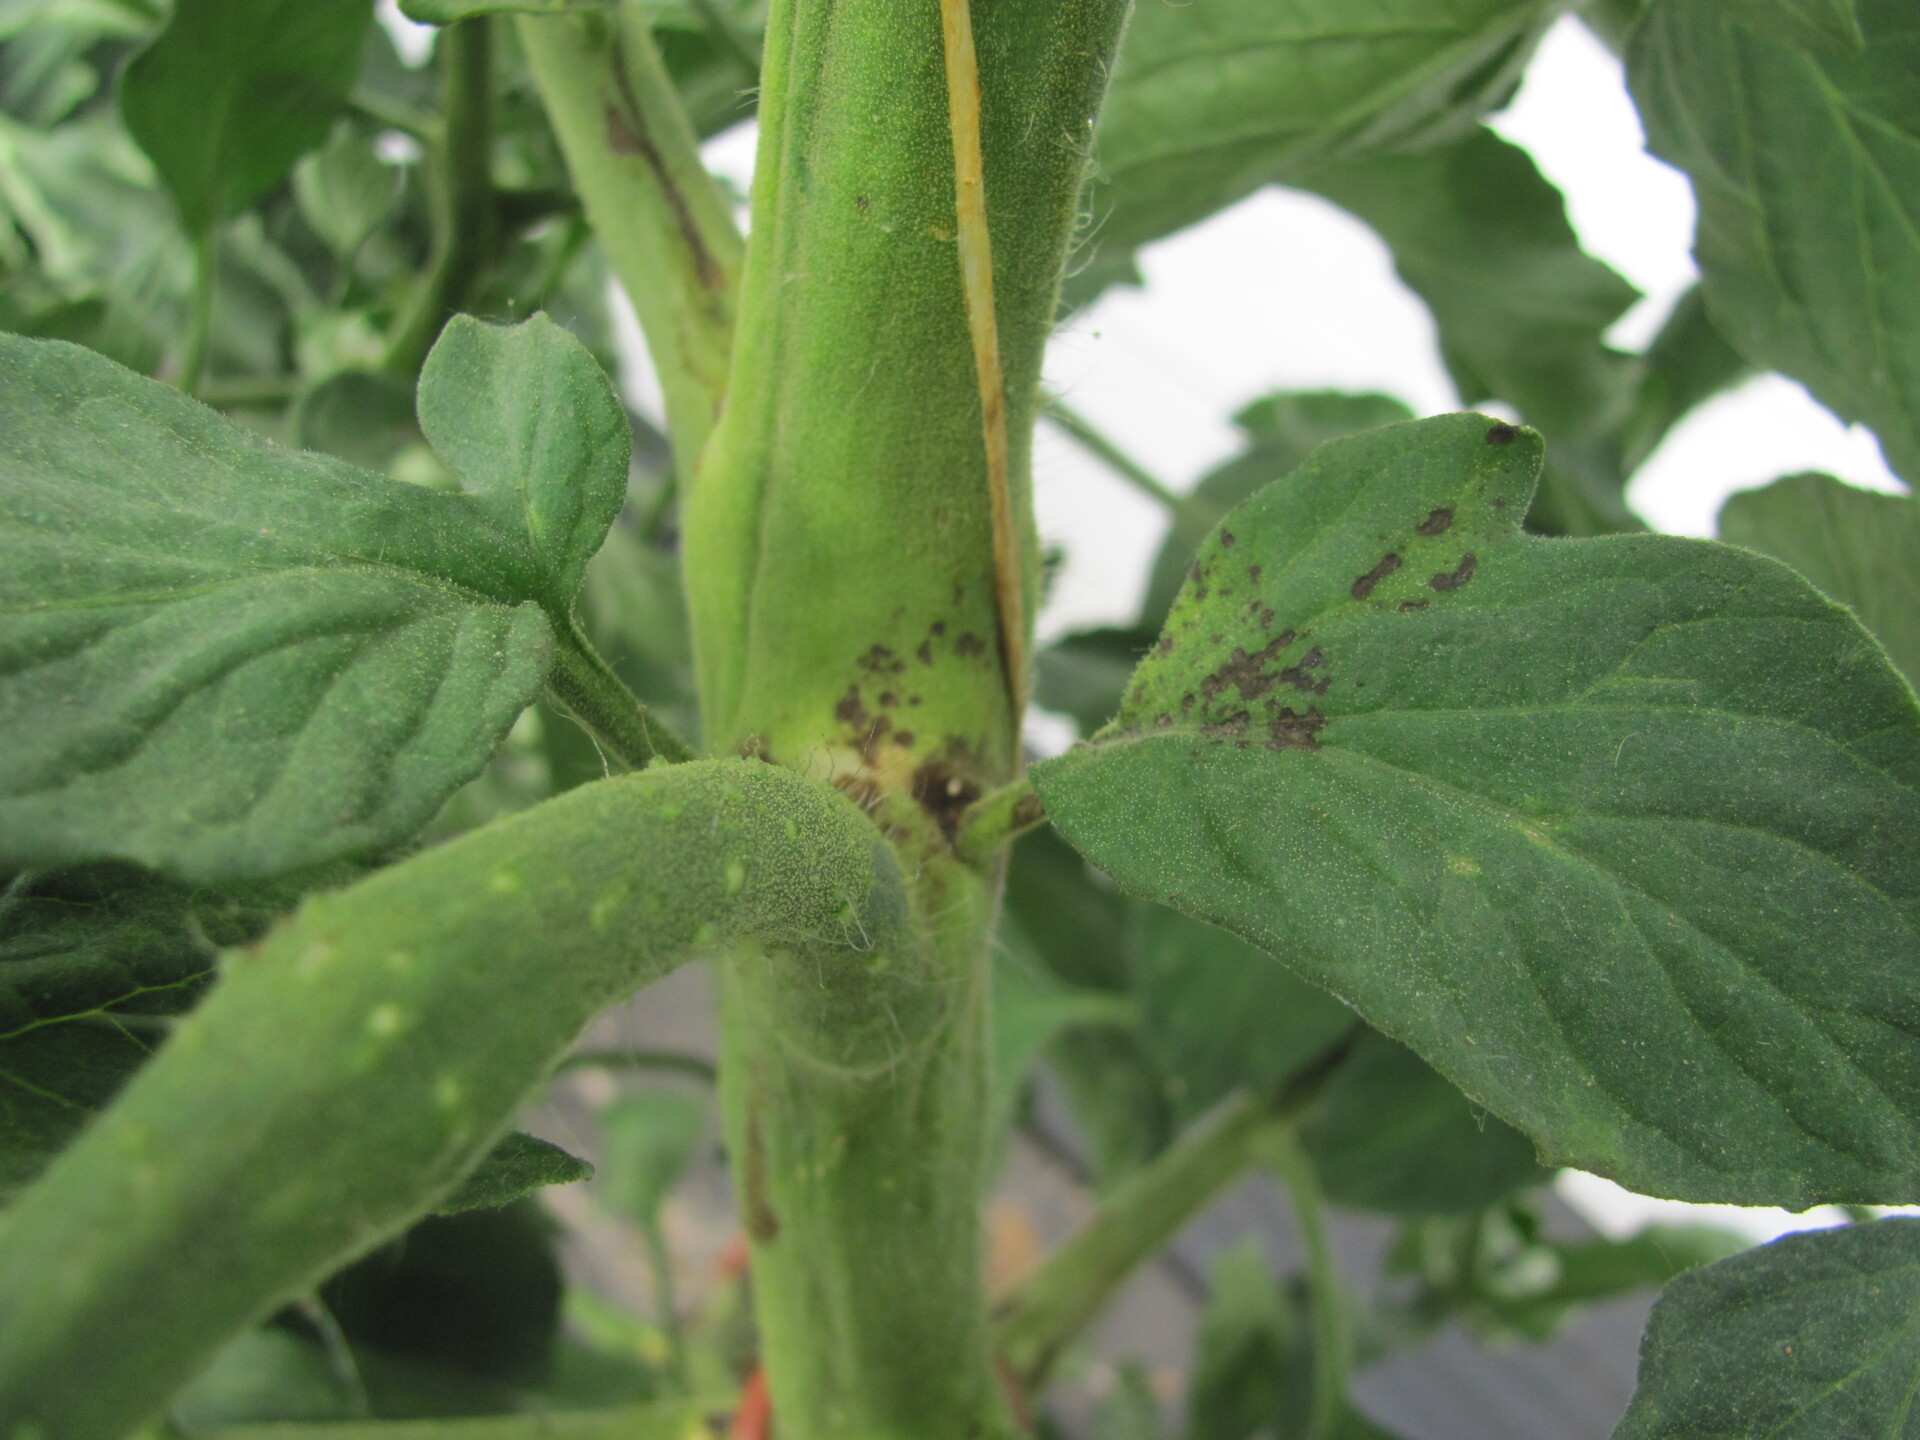 Early symptoms of pith necrosis of tomato.